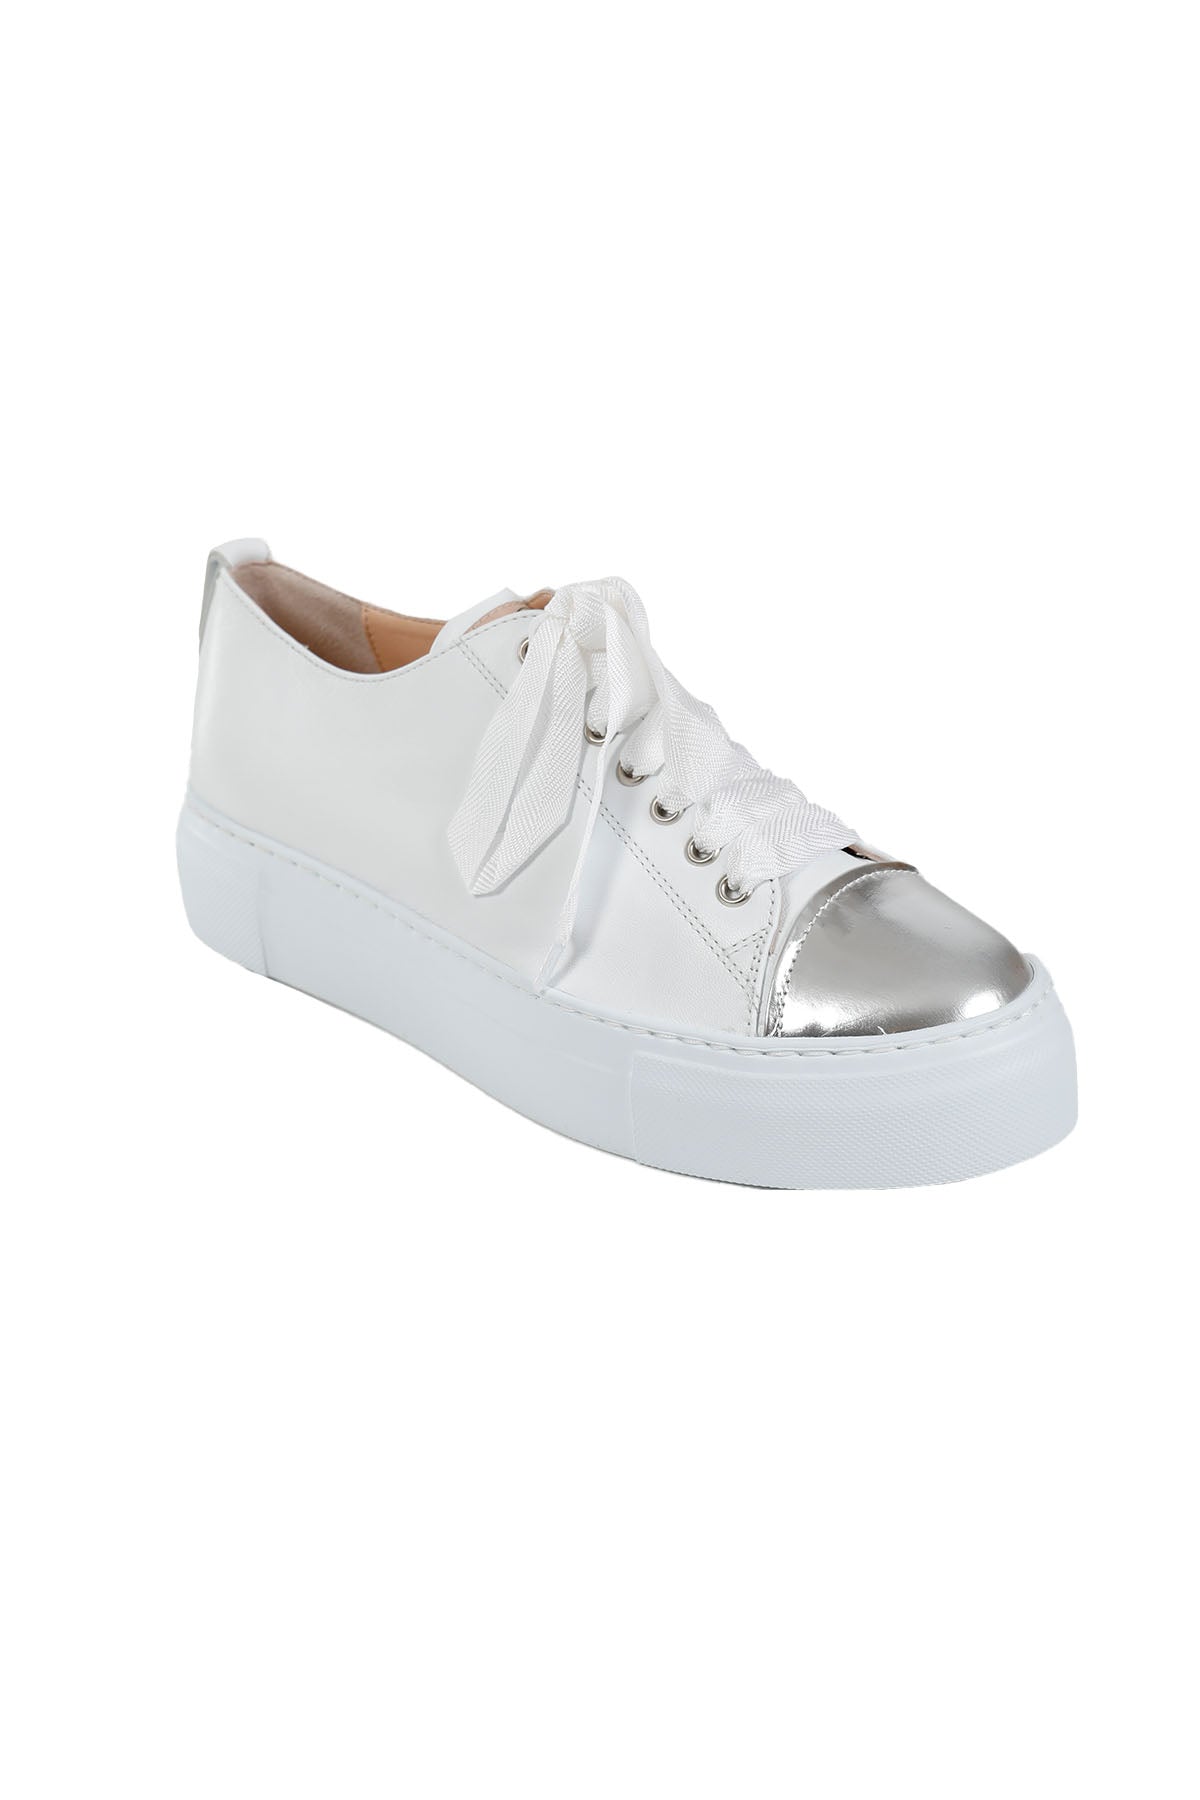 Agl Mollie Metalik Burunlu Sneaker Ayakkabı-Libas Trendy Fashion Store